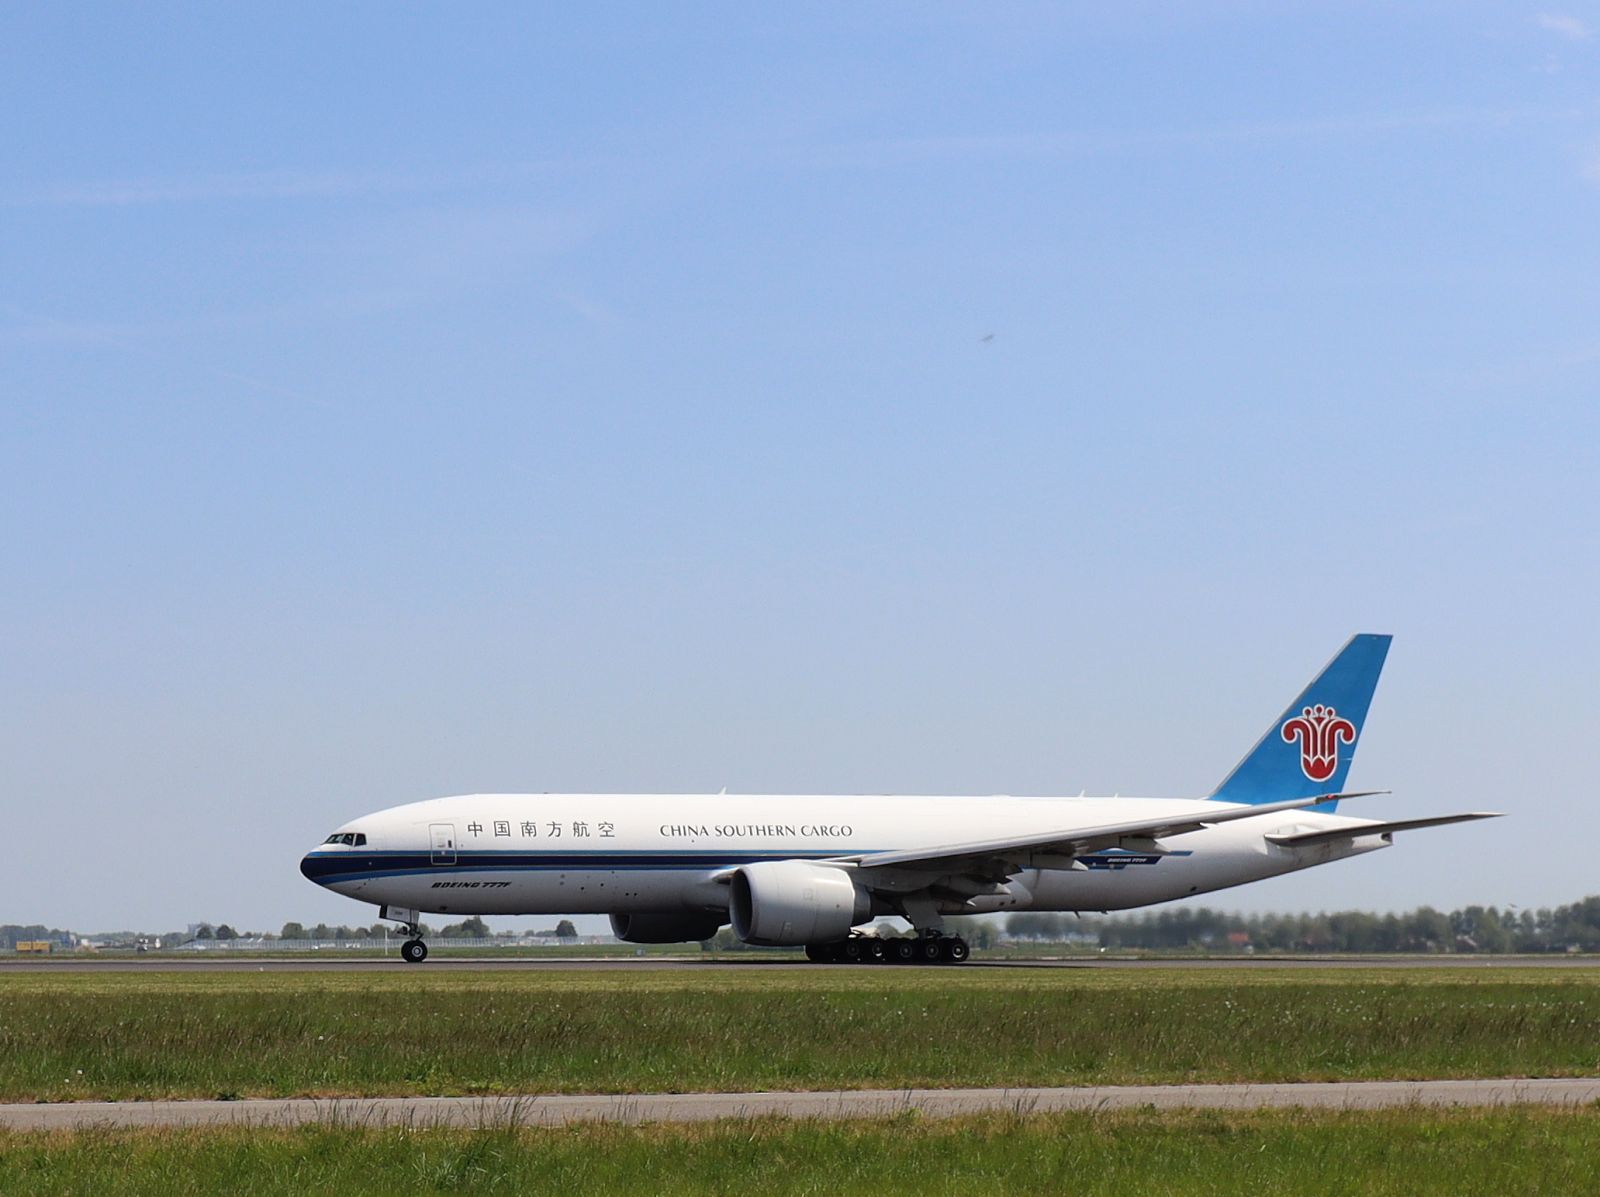 B-2028 China Southern Airlines Boeing 777-F1B Flughafen Schiphol Amsterdam, Niederlande. Erstflug dieses Flugzeugs war am 28-06-2015. Vijfhuizen 15-05-2022.

B-2028 China Southern Airlines Boeing 777-F1B luchthaven Schiphol. Eerste vlucht van dit vliegtuig was op 28-06-2015. Vijfhuizen 15-05-2022.